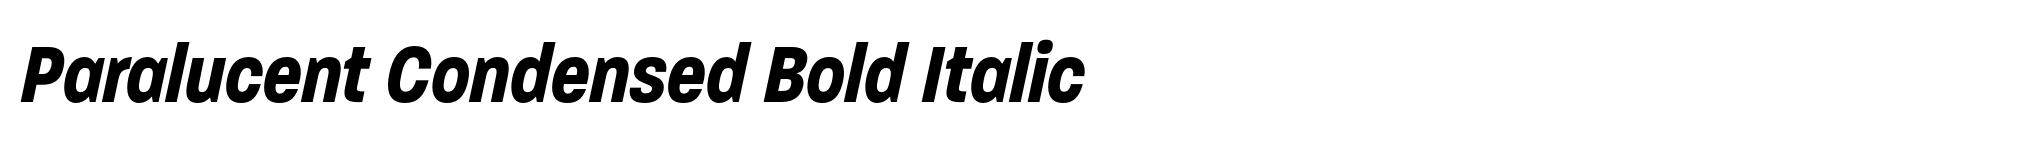 Paralucent Condensed Bold Italic image